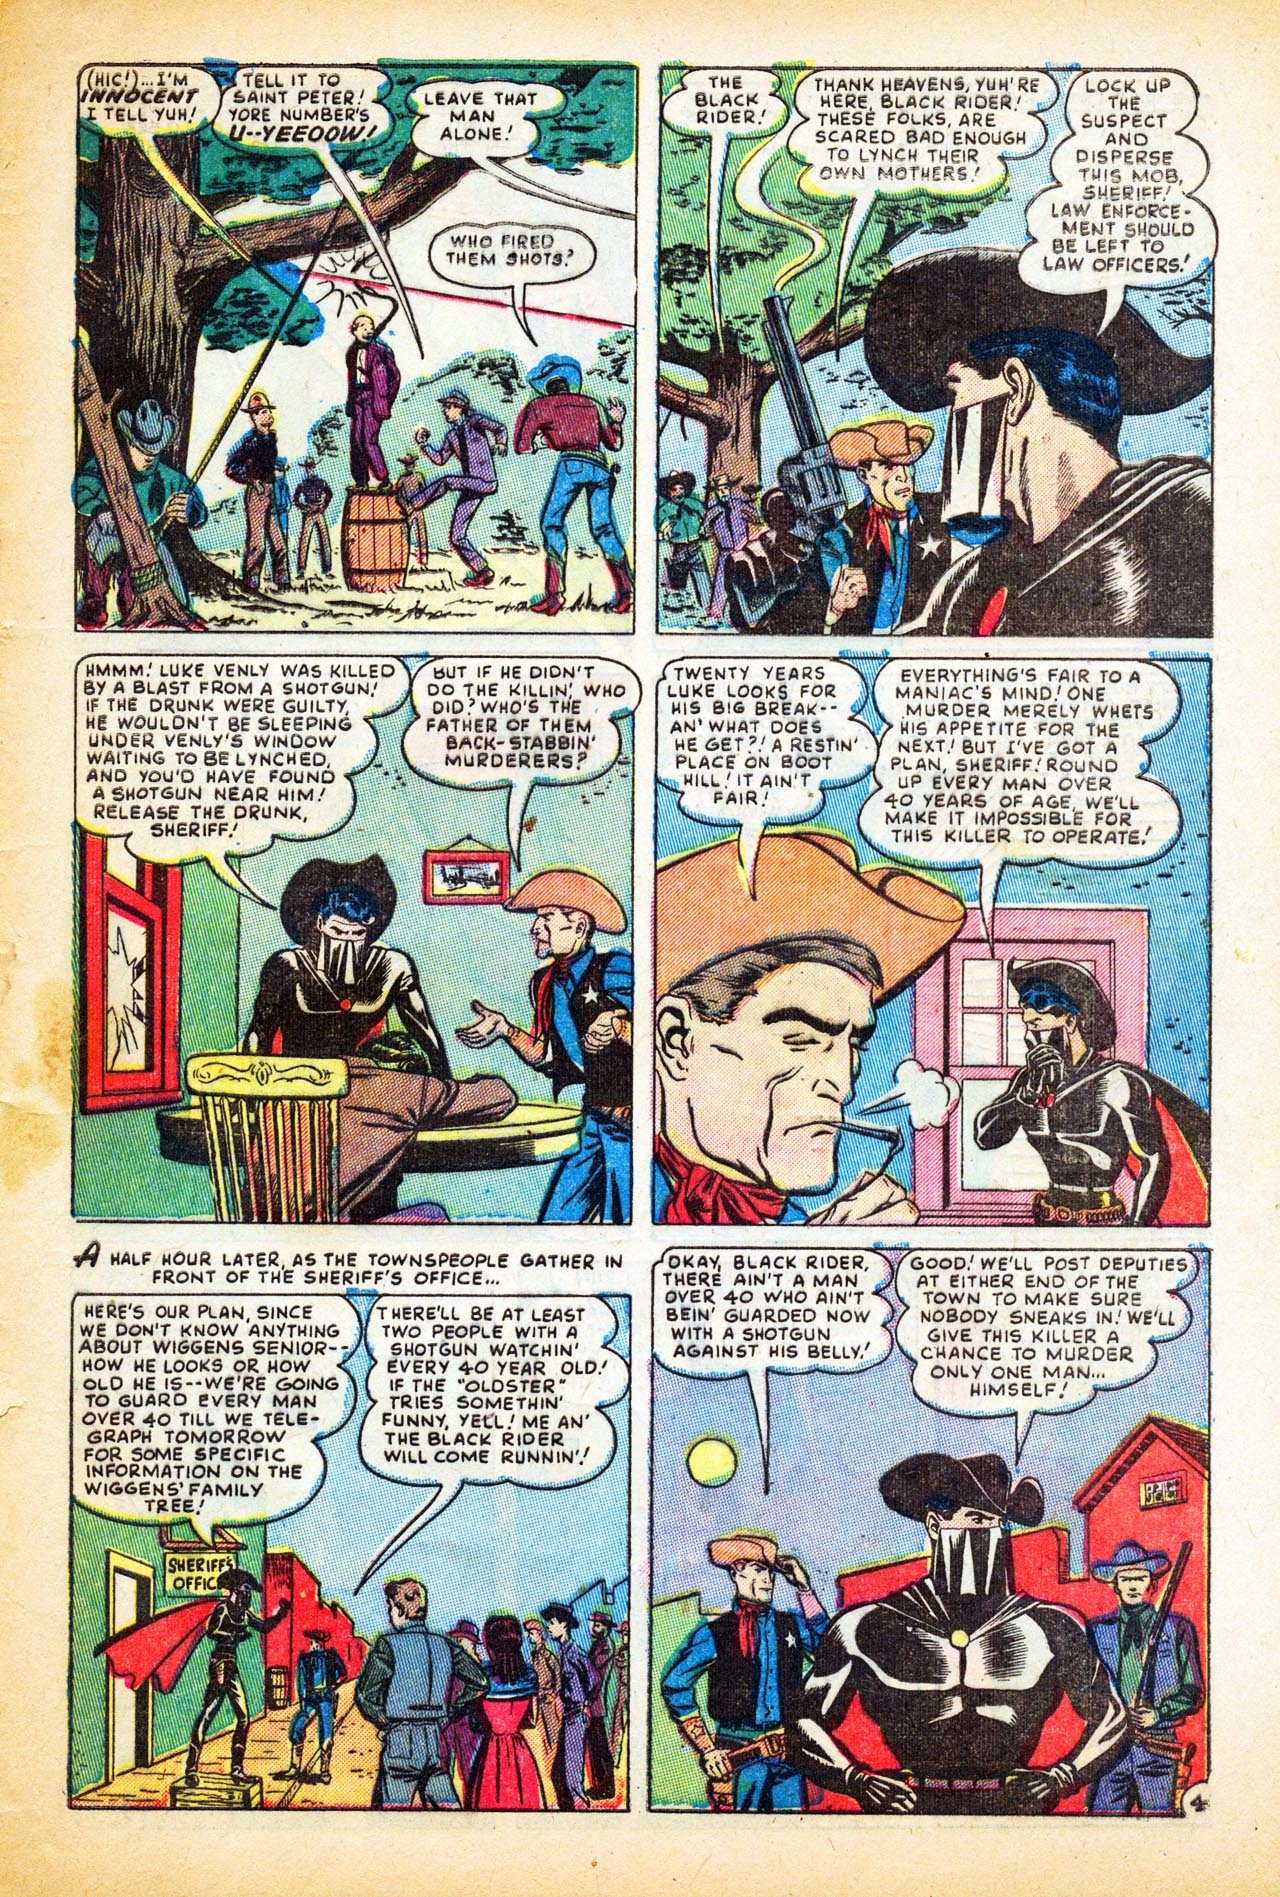 Black Rider 16 Page 28